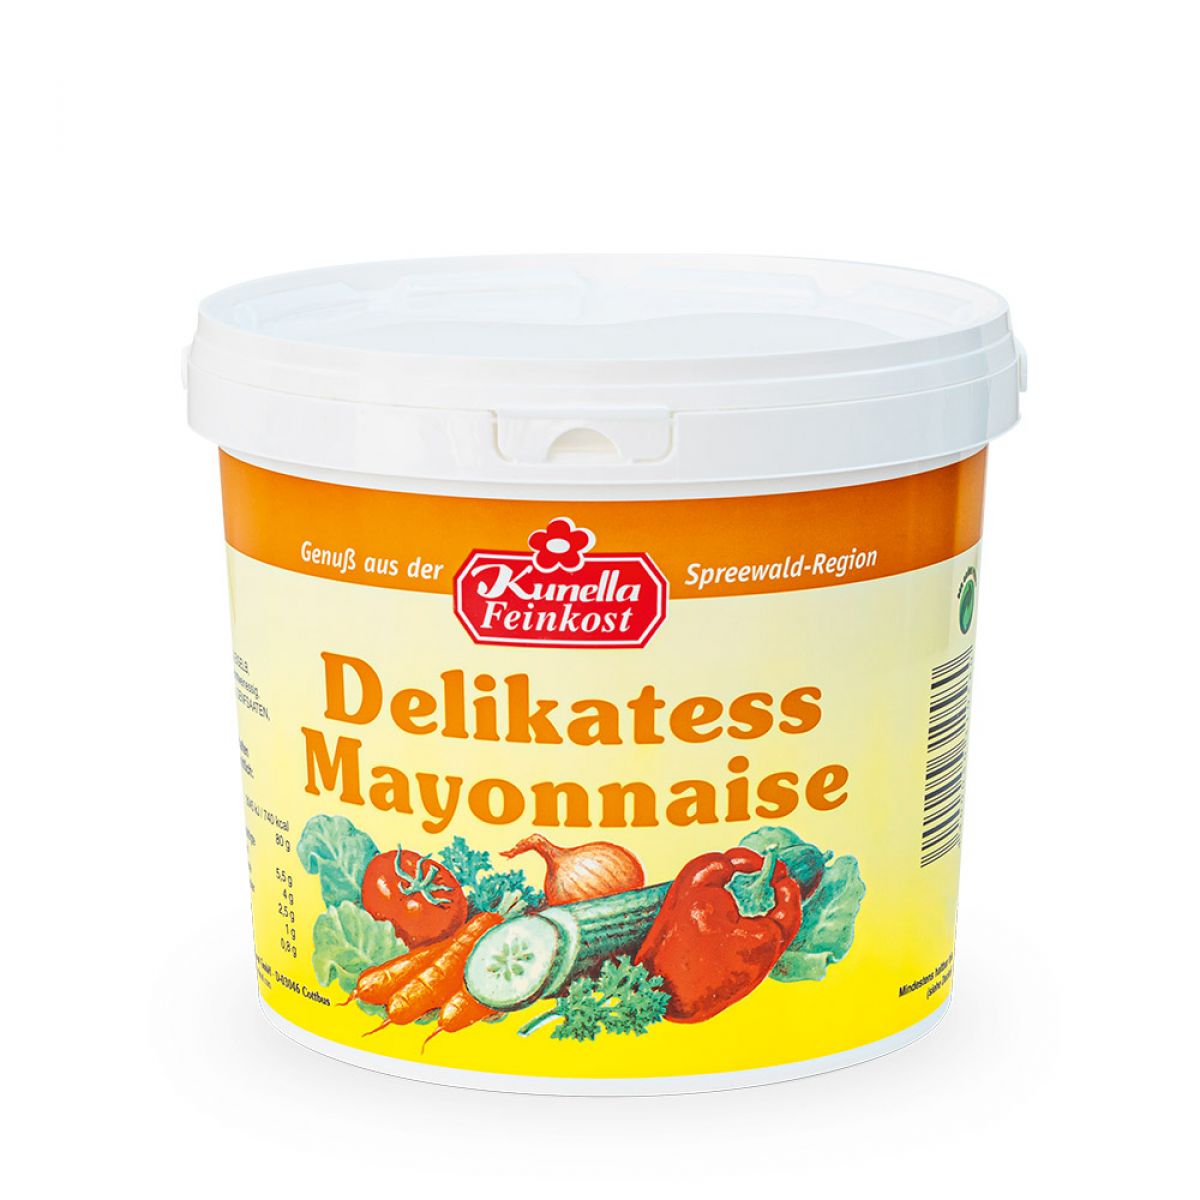 Delicatess Mayonnaise 5Kg